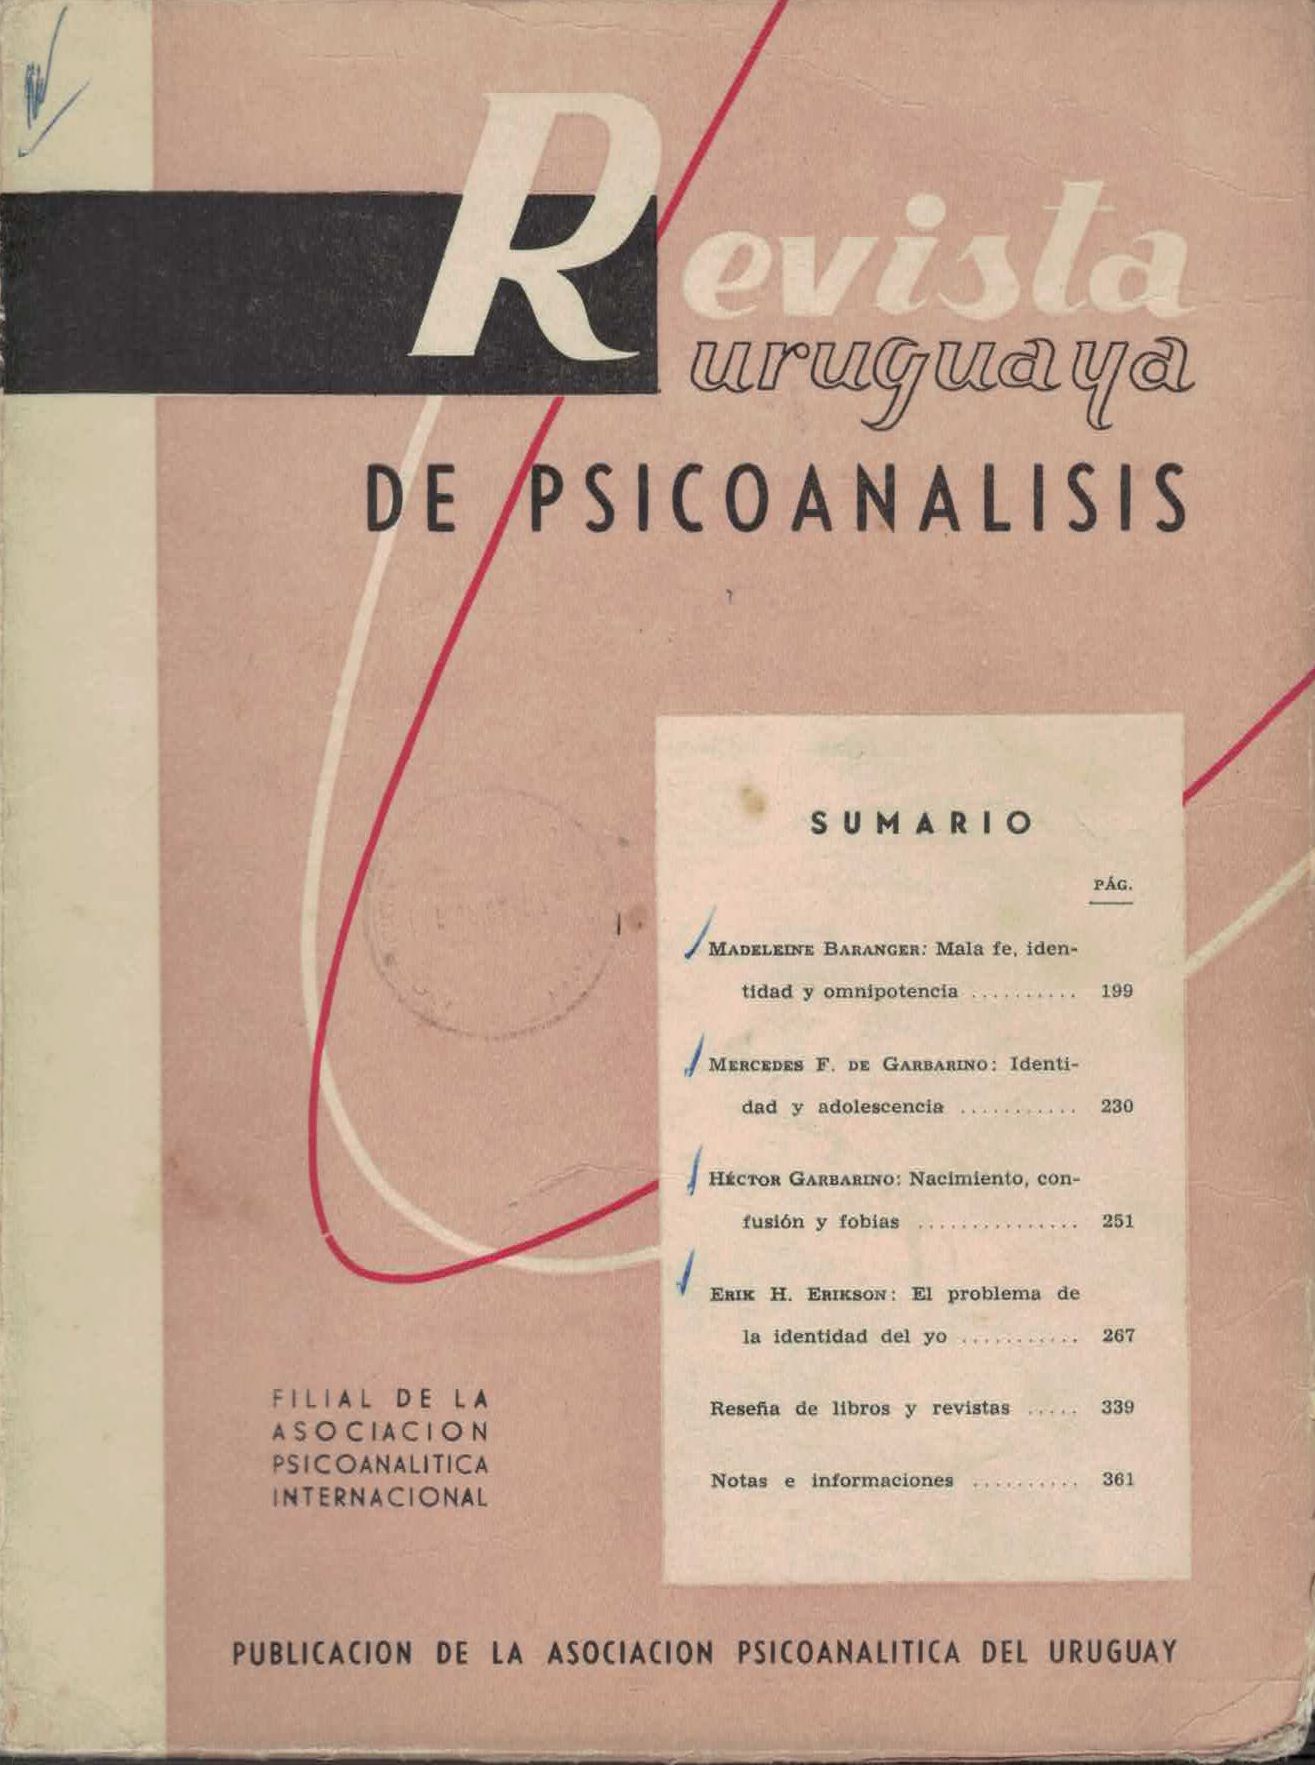 					Ver Vol. 5 Núm. 2-3 (1963): Revista Uruguaya de Psicoanálisis
				